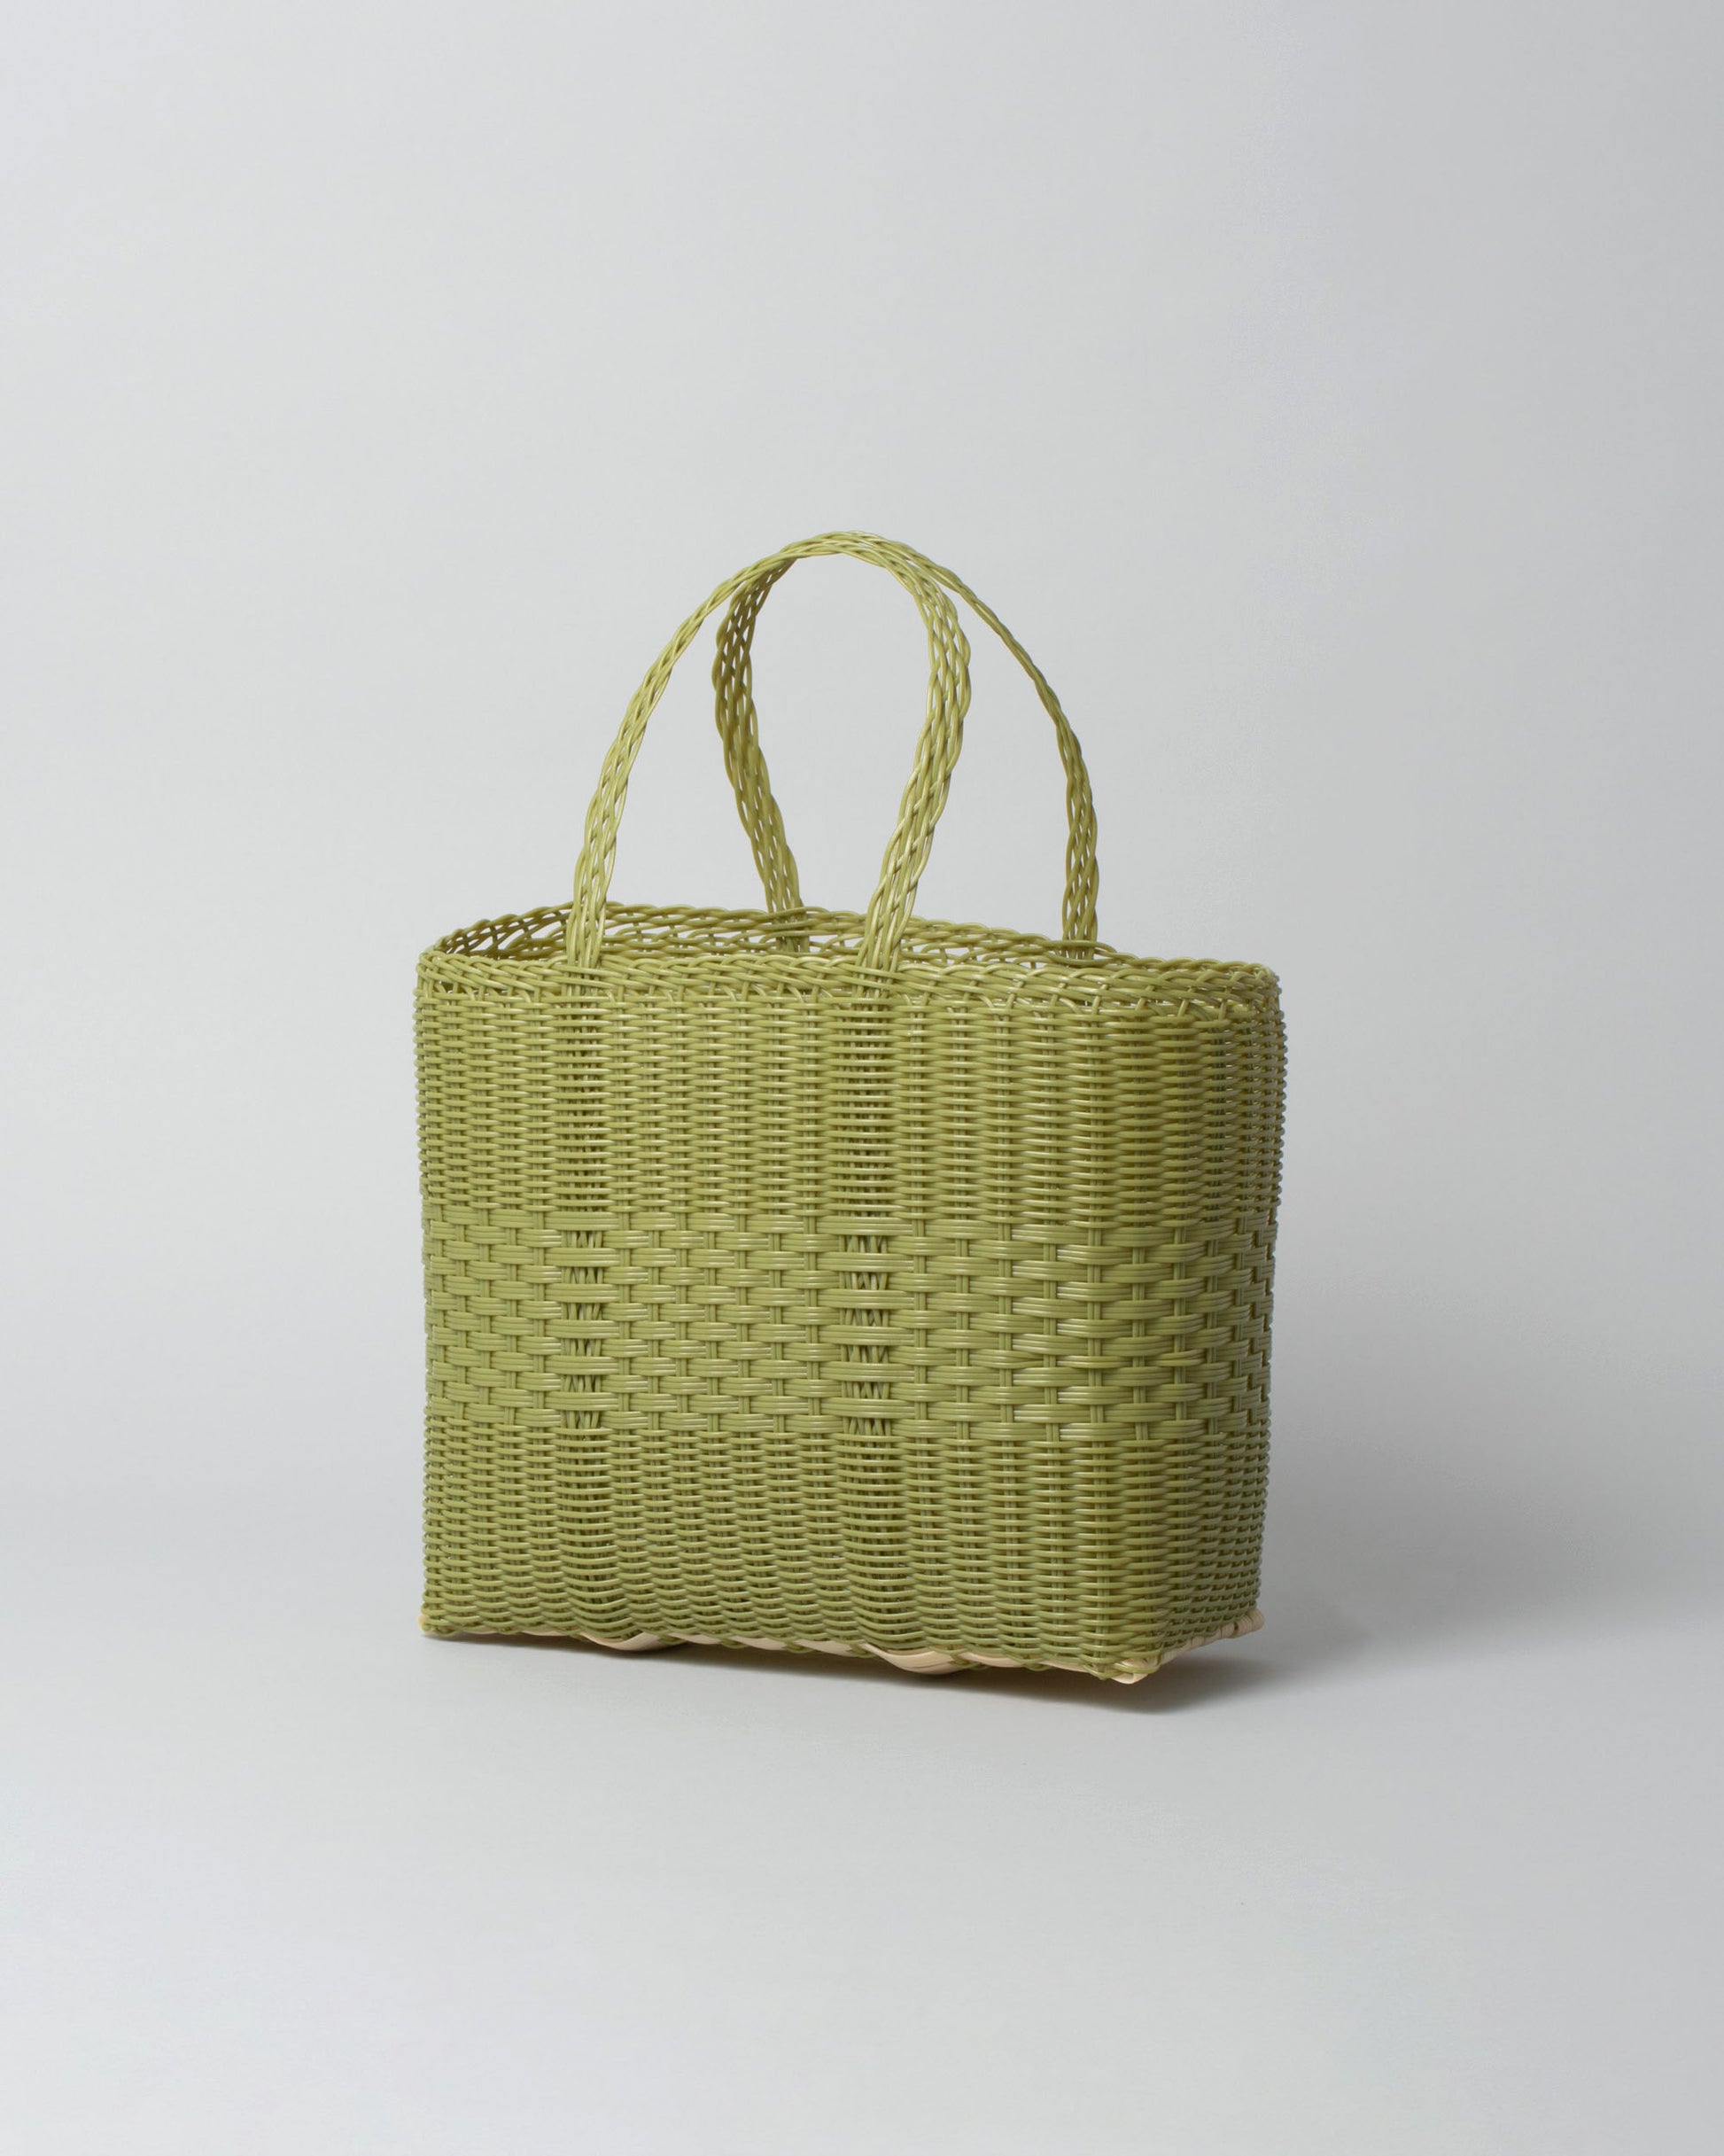 Palorosa Small Pistachio Lace Tote Basket Bag on light color background.